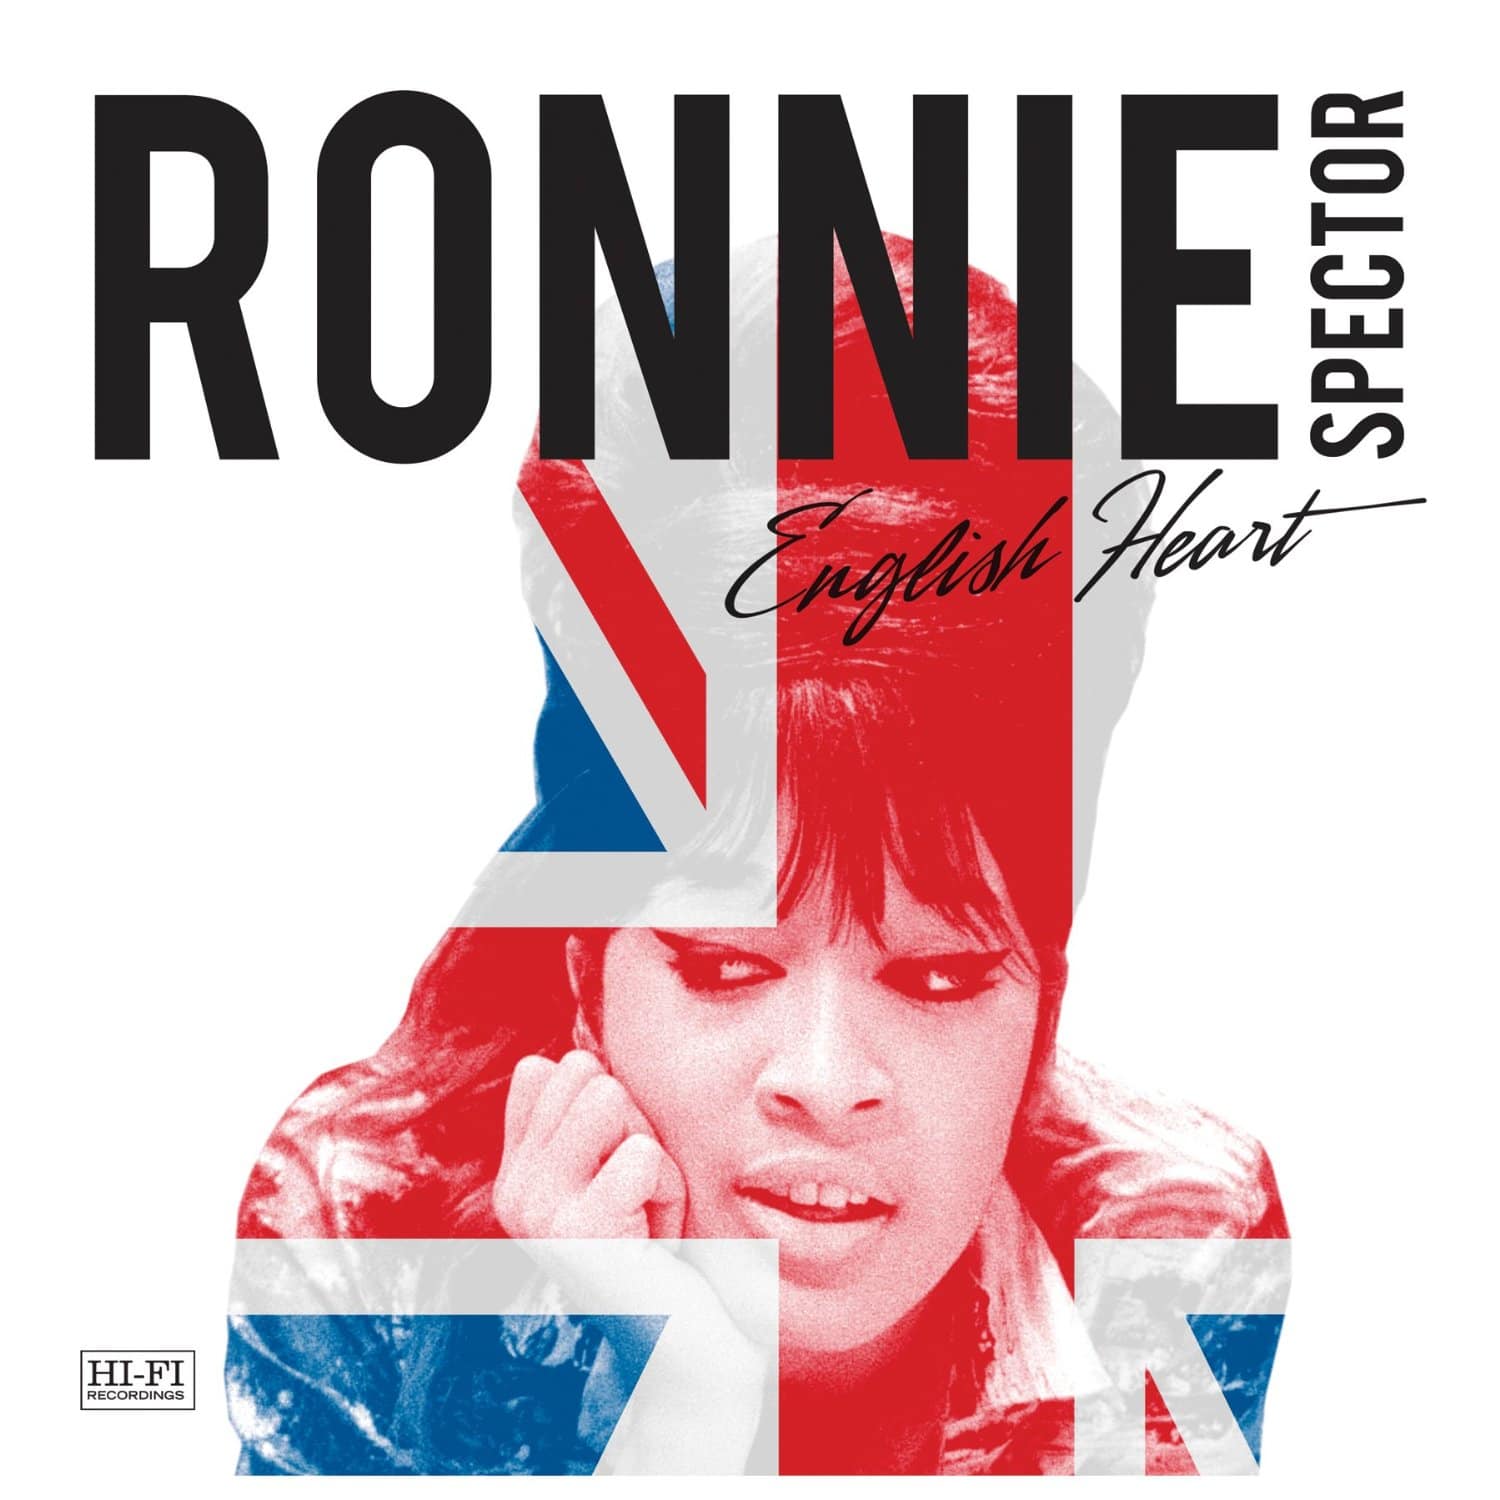 Ronnie Spector: English Heart